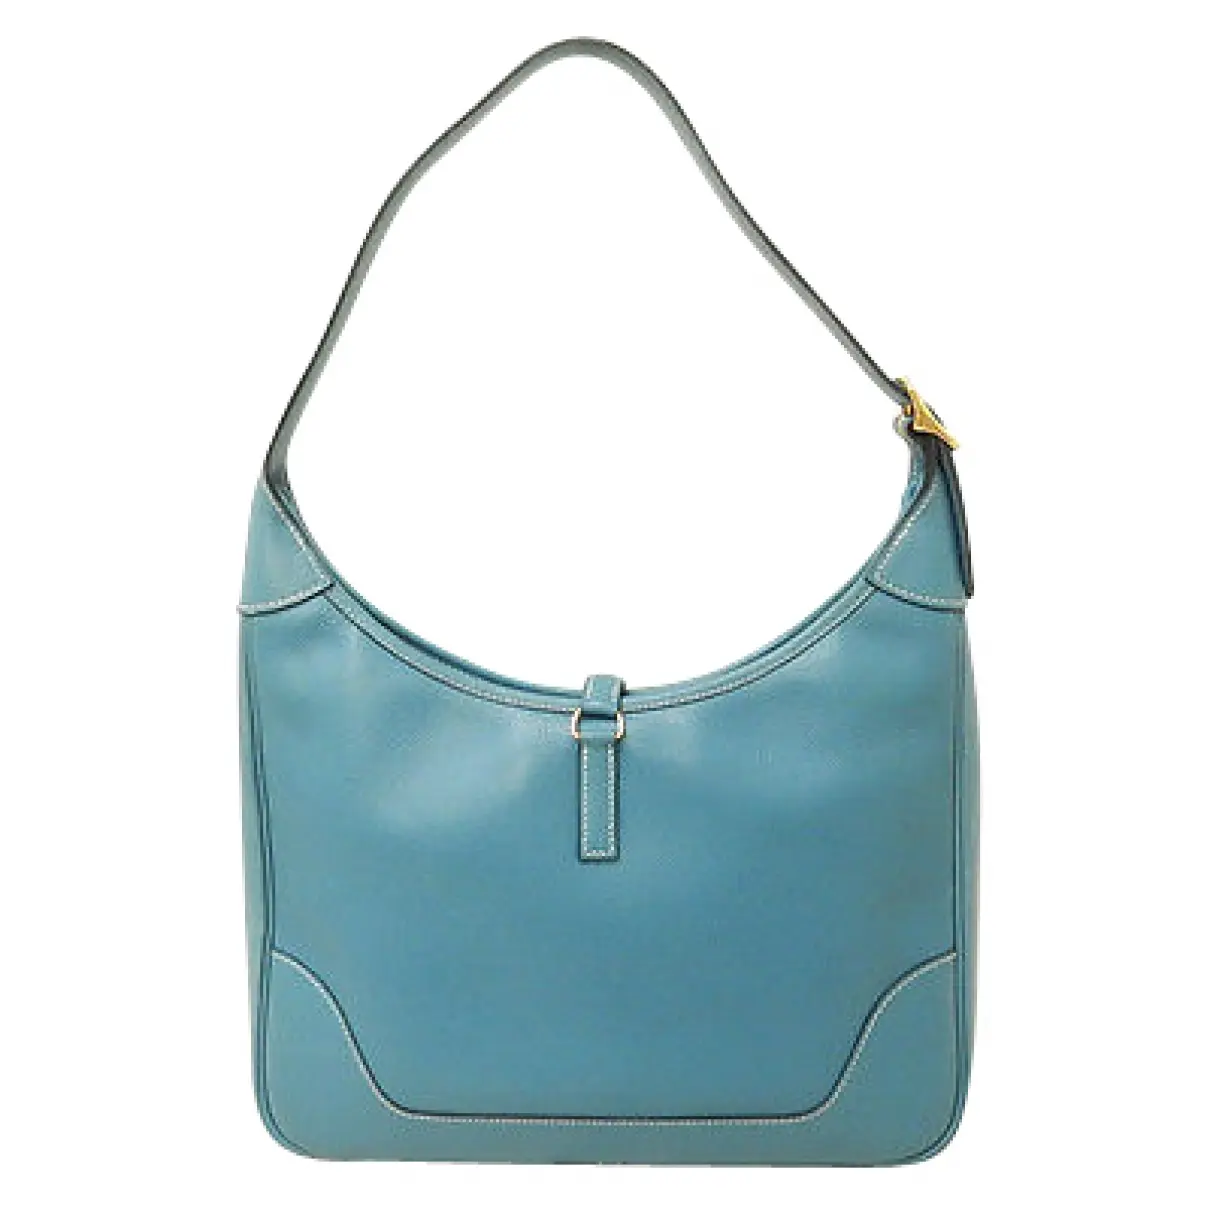 Buy Hermès Trim leather handbag online - Vintage